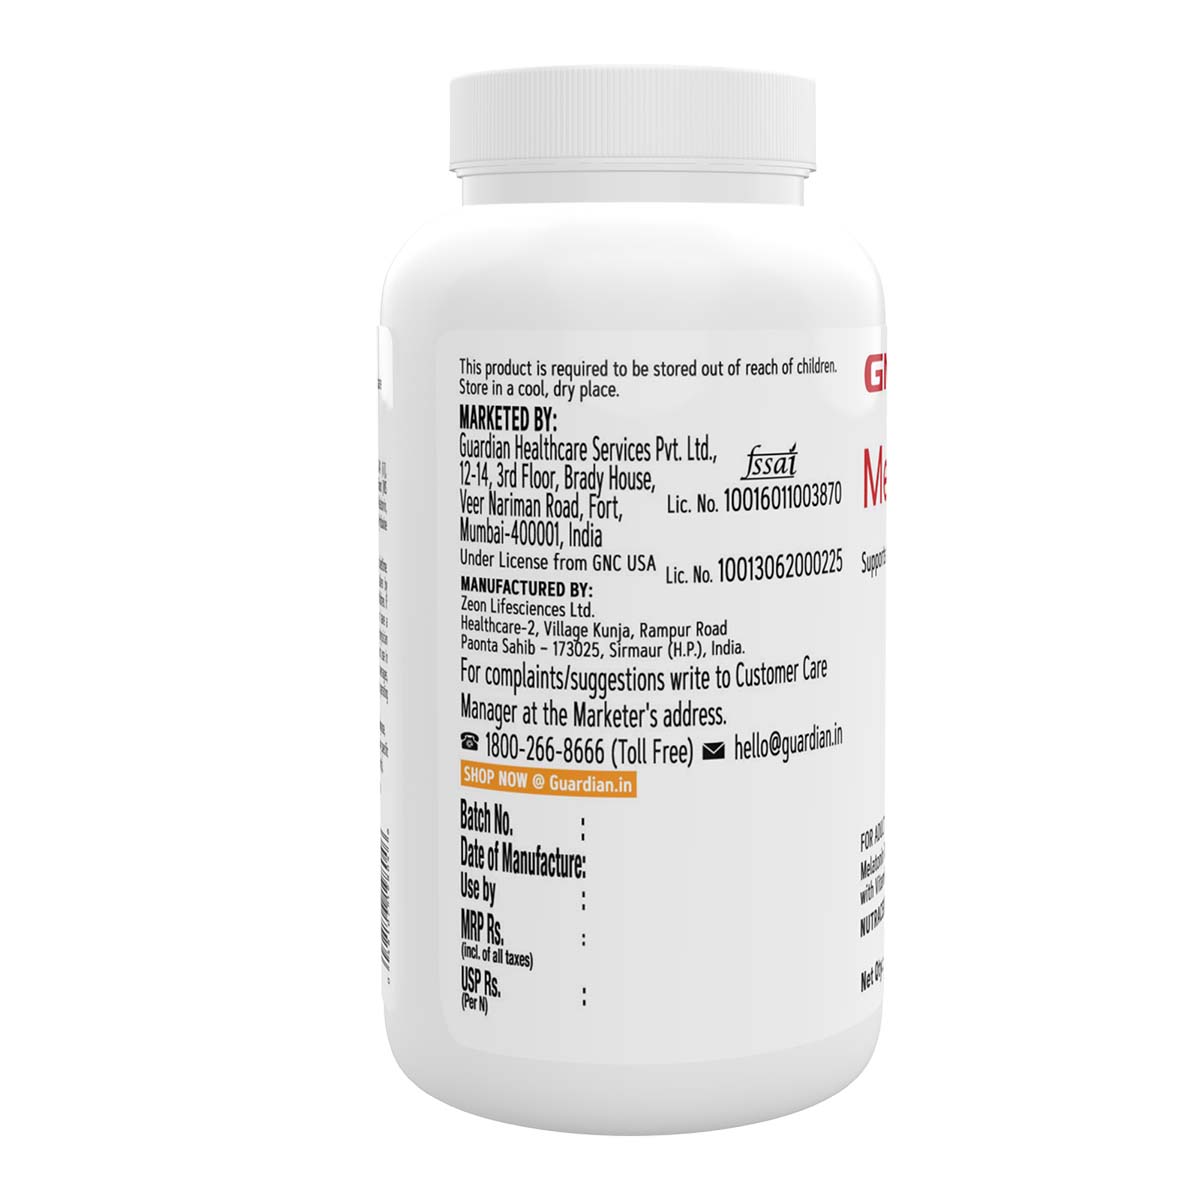 GNC Melatonin With Vitamin B6 - Tablets Promotes Restful Sleep & Relaxation